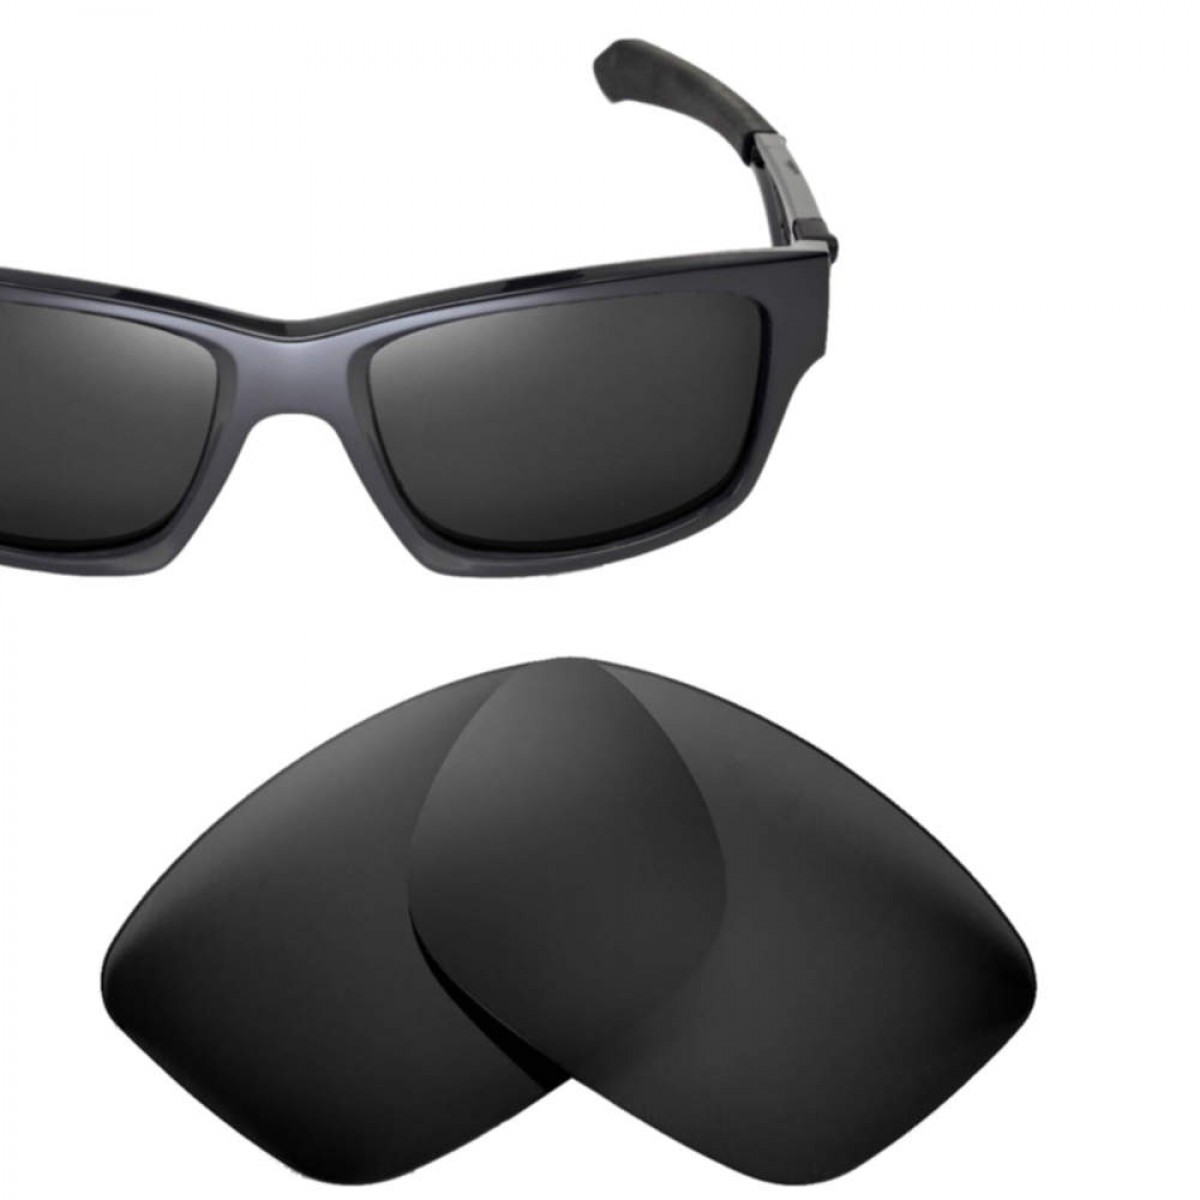 Cofery Lenses Store Cofery Replacement for Oakley Jupiter Squared Sunglasses